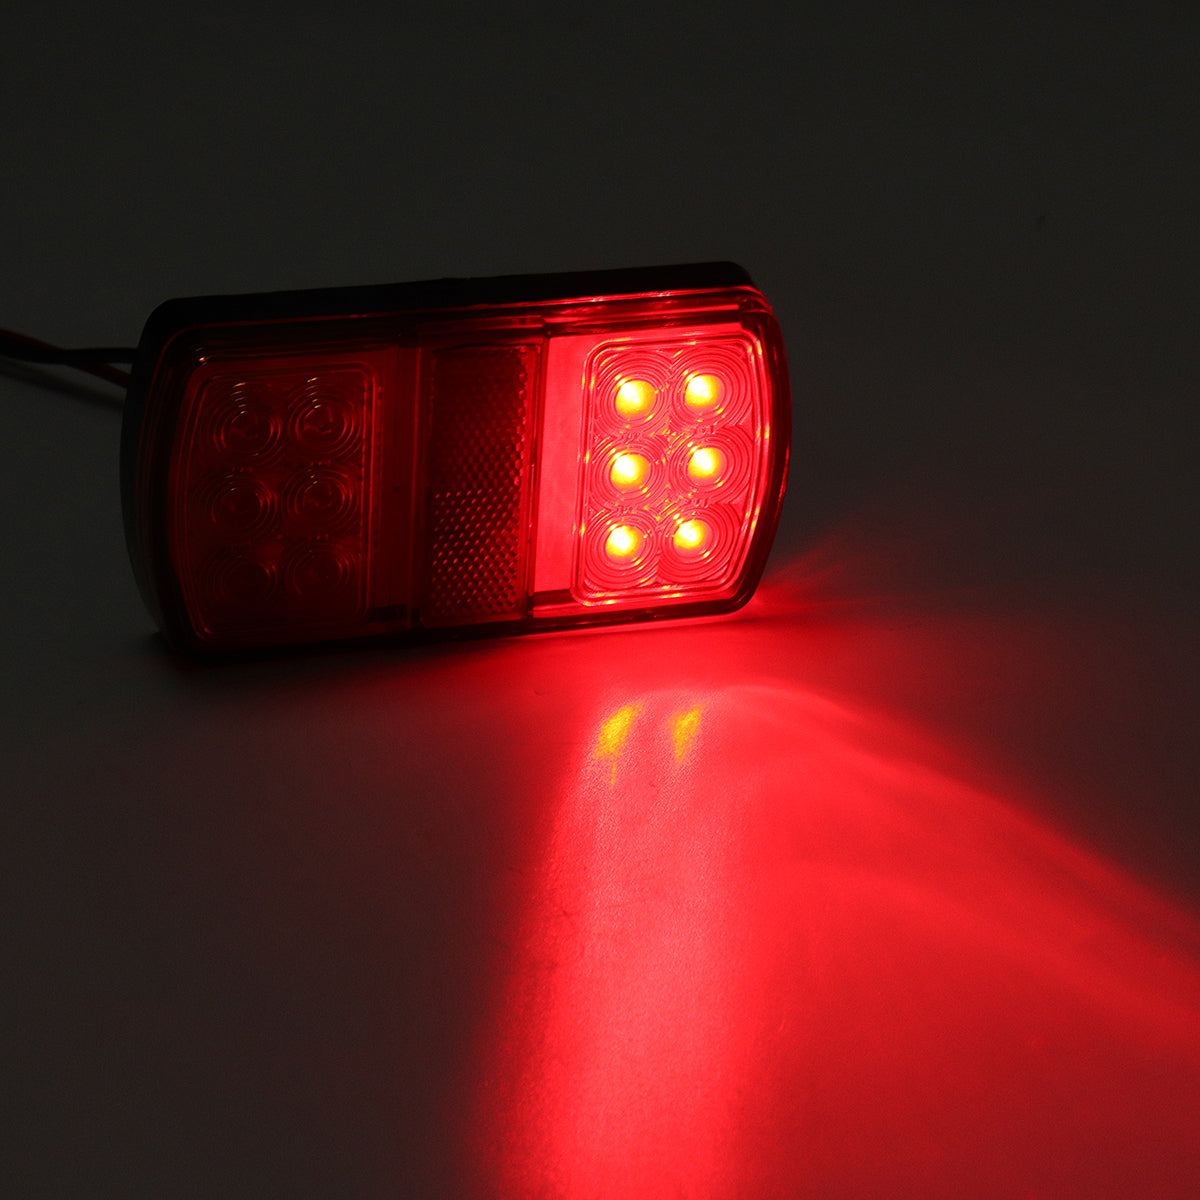 Orange Red 3PCS 6000K LED Car Tail Light Number Plate Light Waterproof Lamp for Truck Trailer Boat